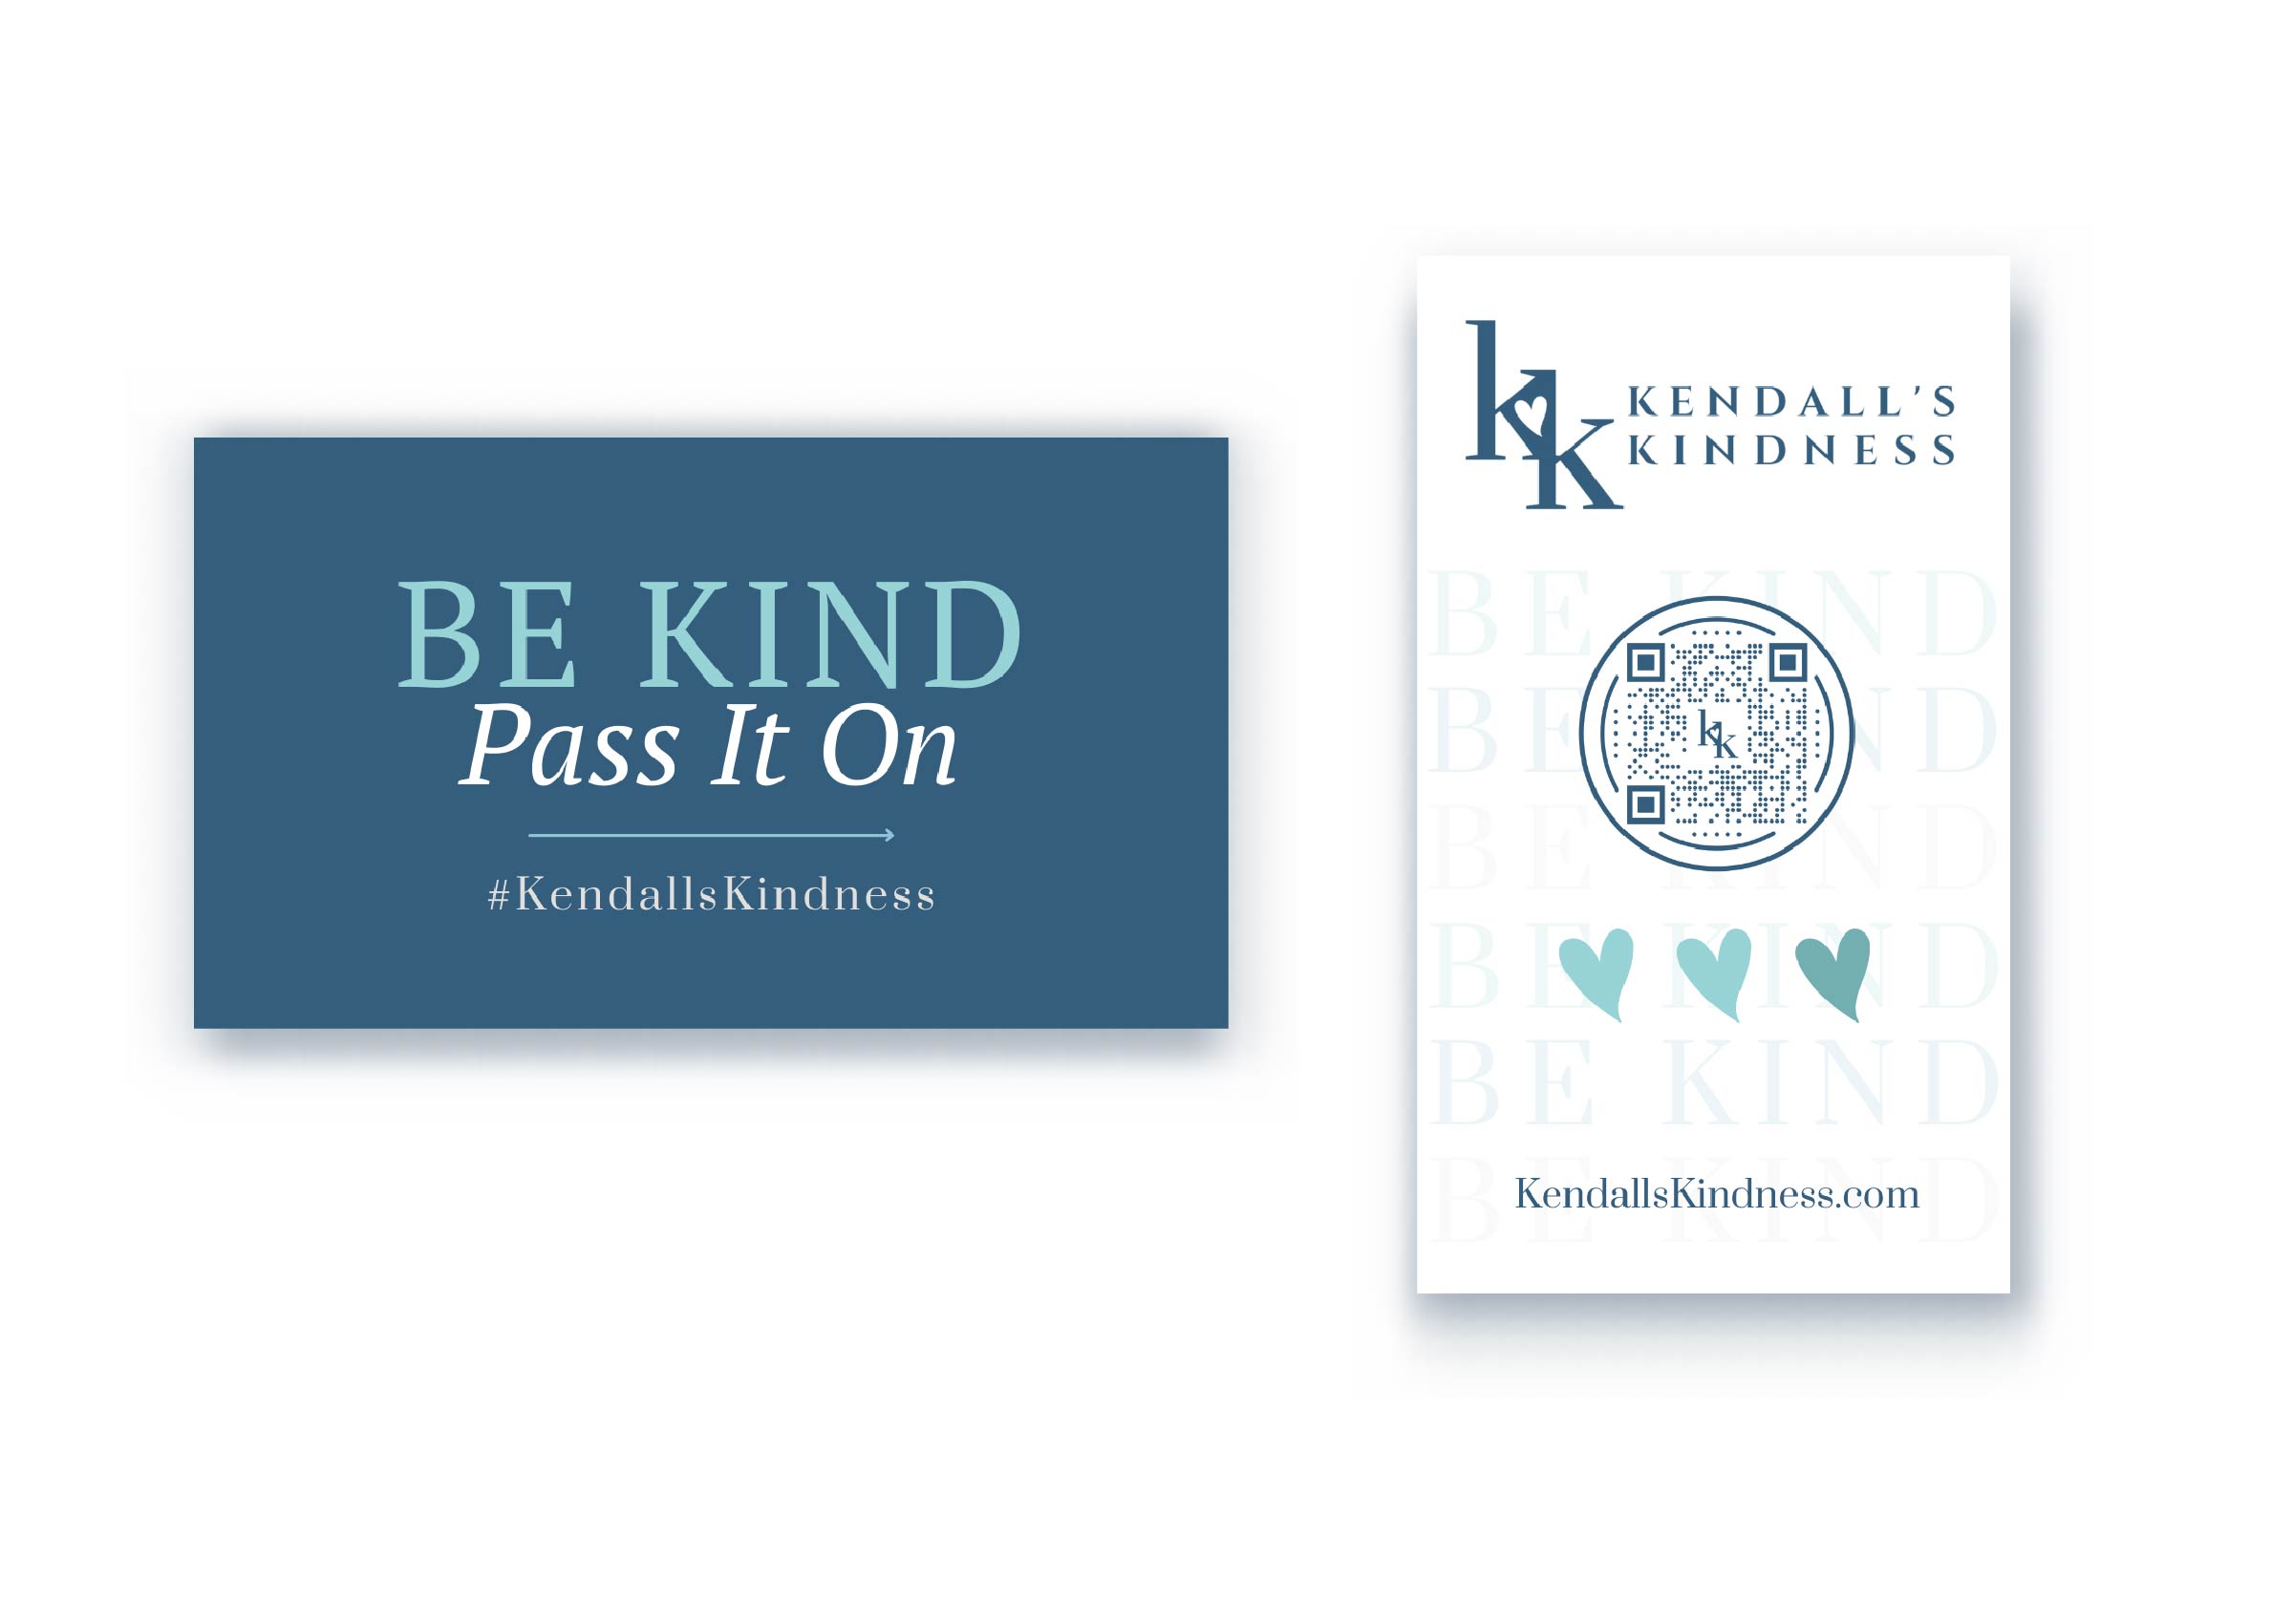 Kendall's Kindness Business Card Mockup 2023